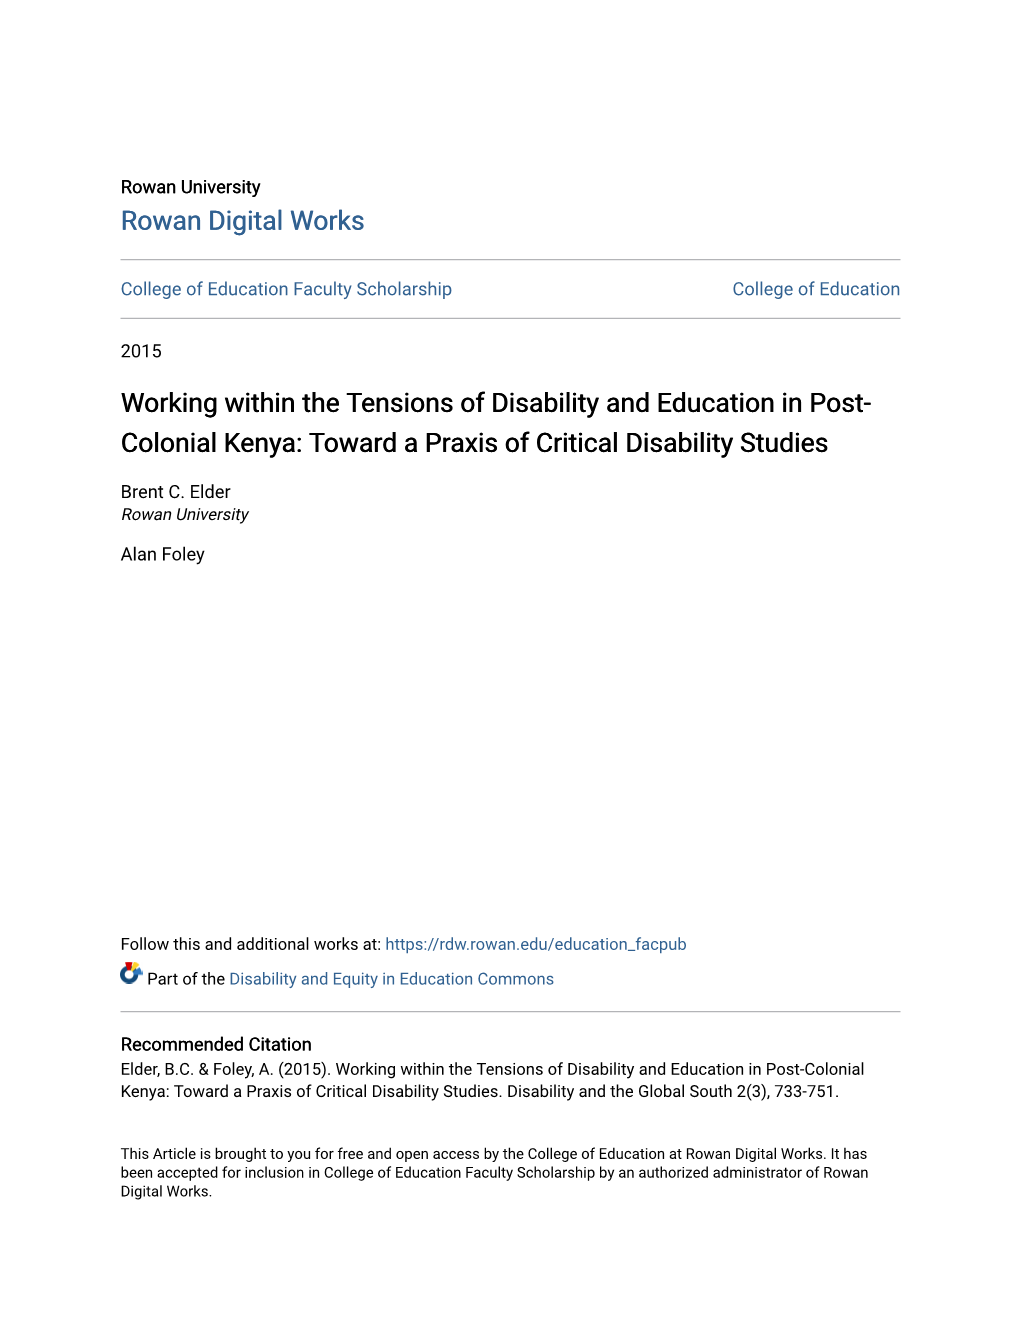 Toward a Praxis of Critical Disability Studies